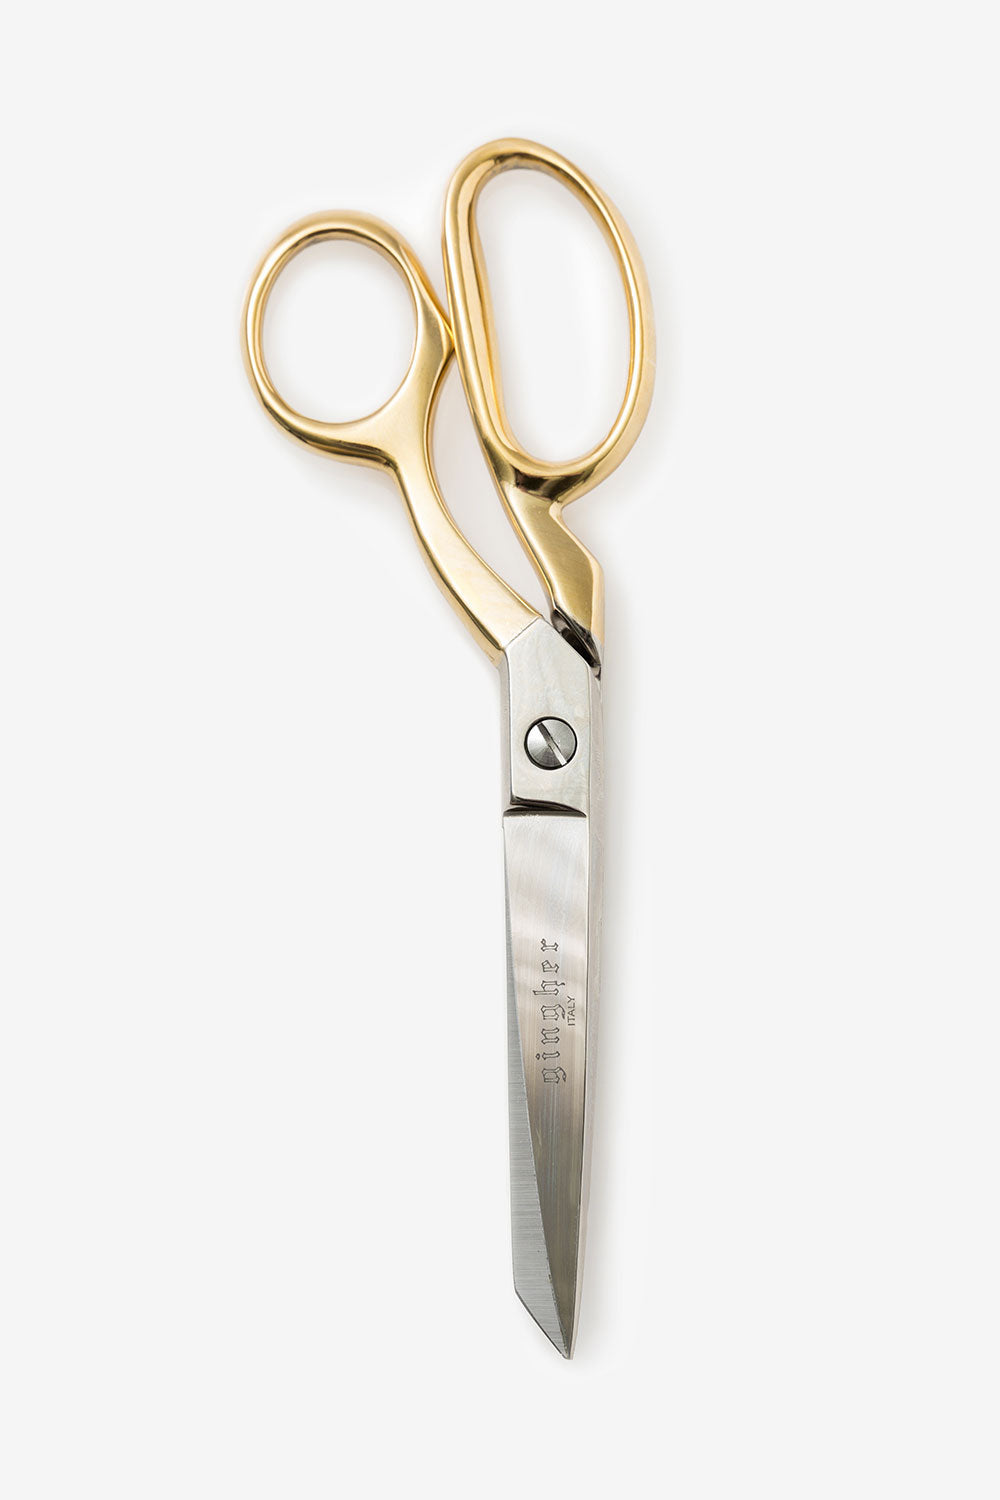 The School of Making Scissors and Shears Gold Handled Knife Edge Dressmaker Shears Gingher